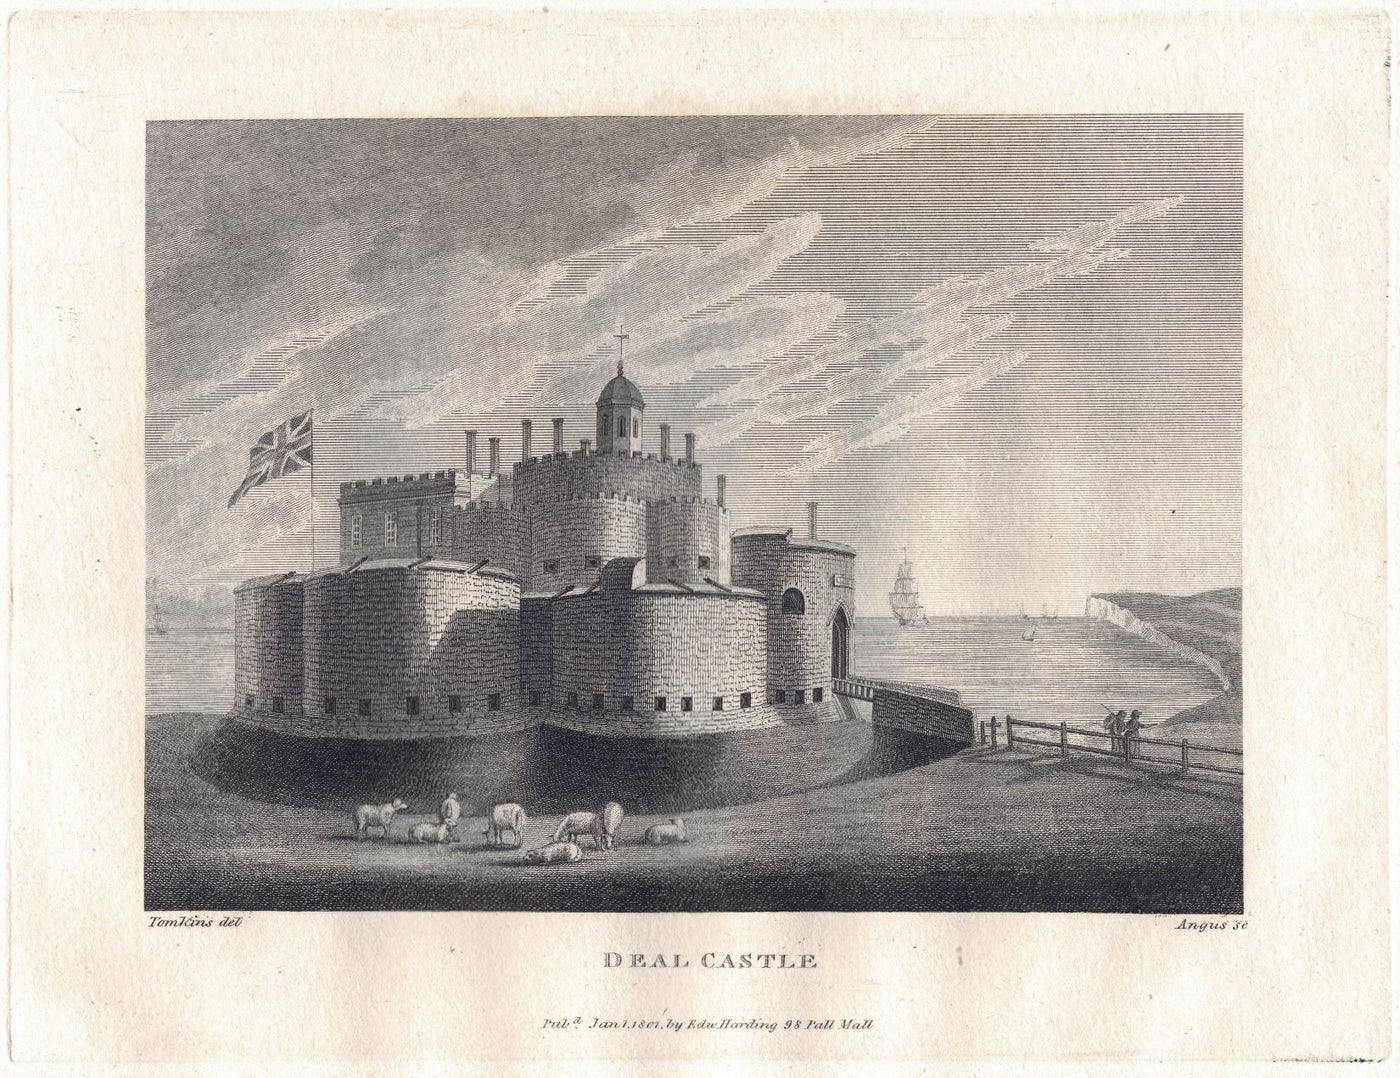 Deal Castle, Kent antique print published in 1801